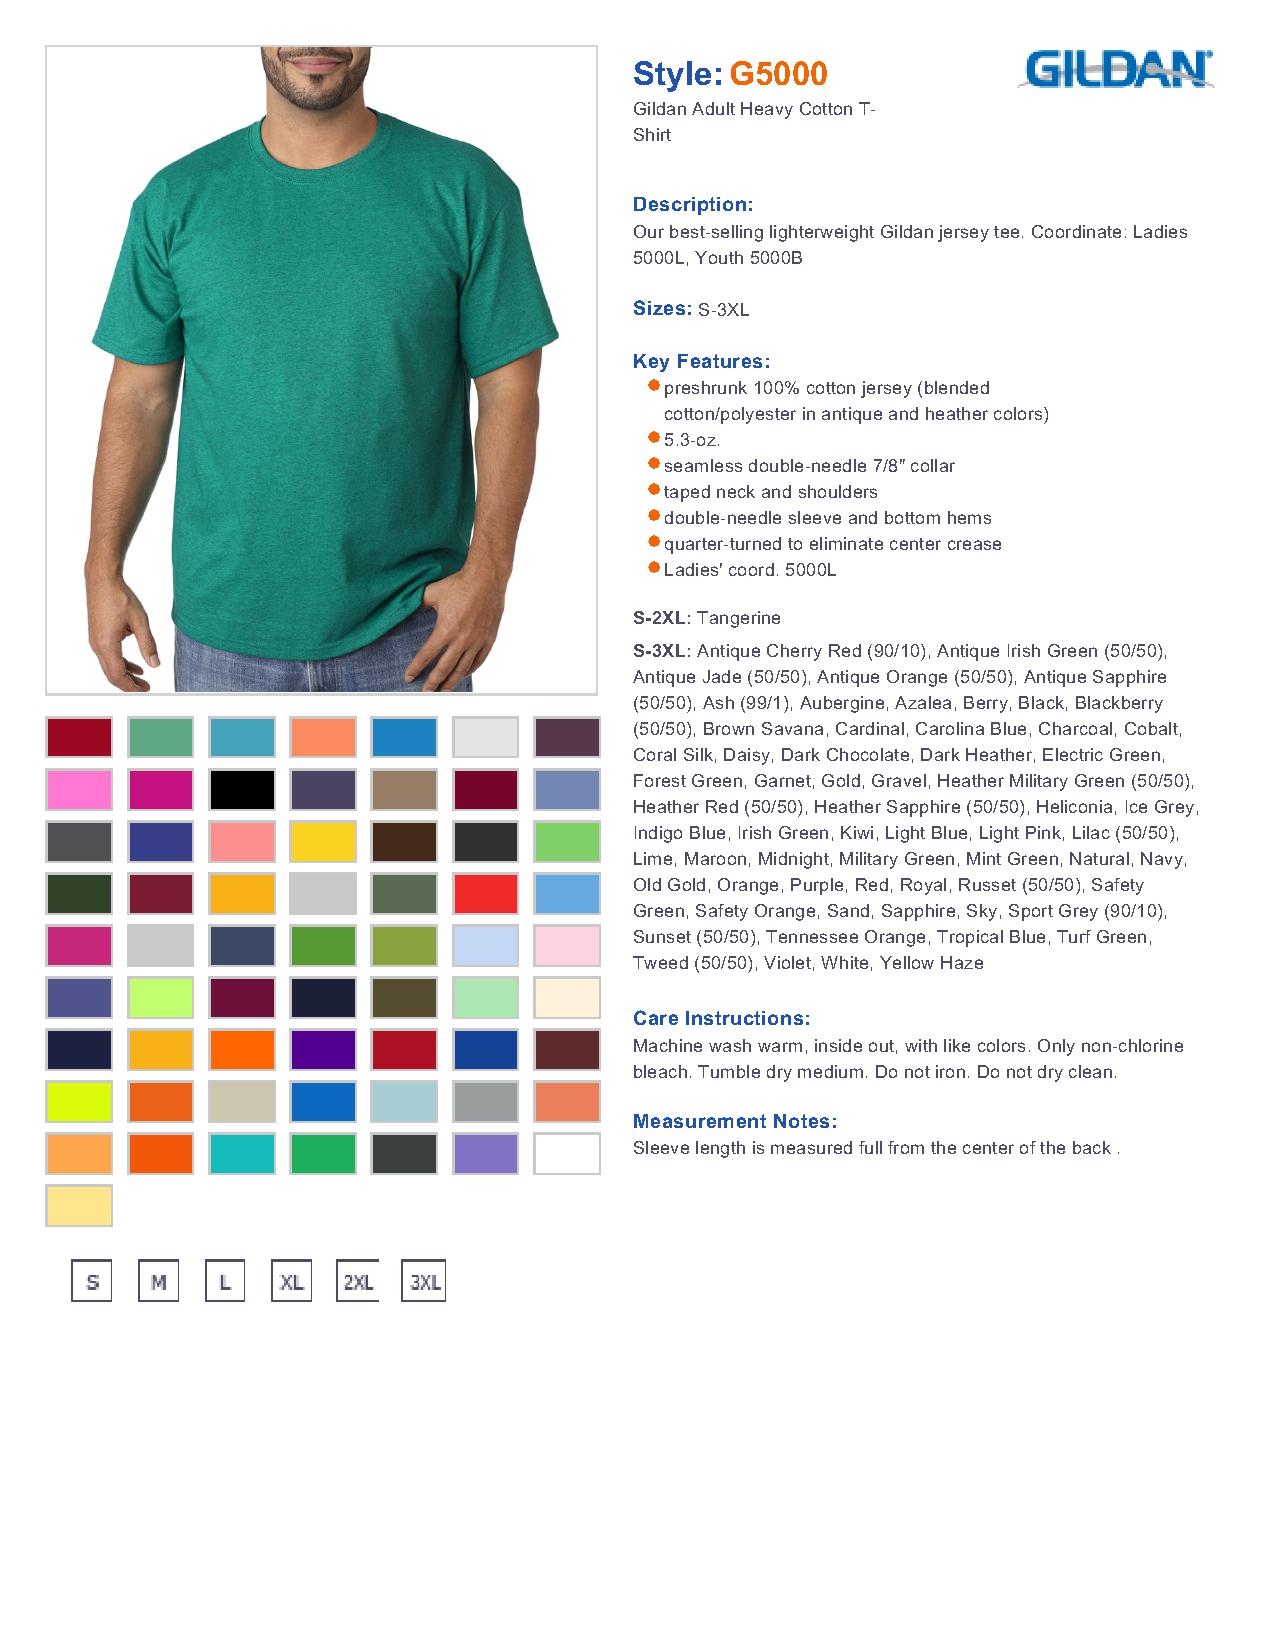 Gildan G5000 - Adult Heavy Cotton T-Shirt $2.10 - Men's T-Shirts